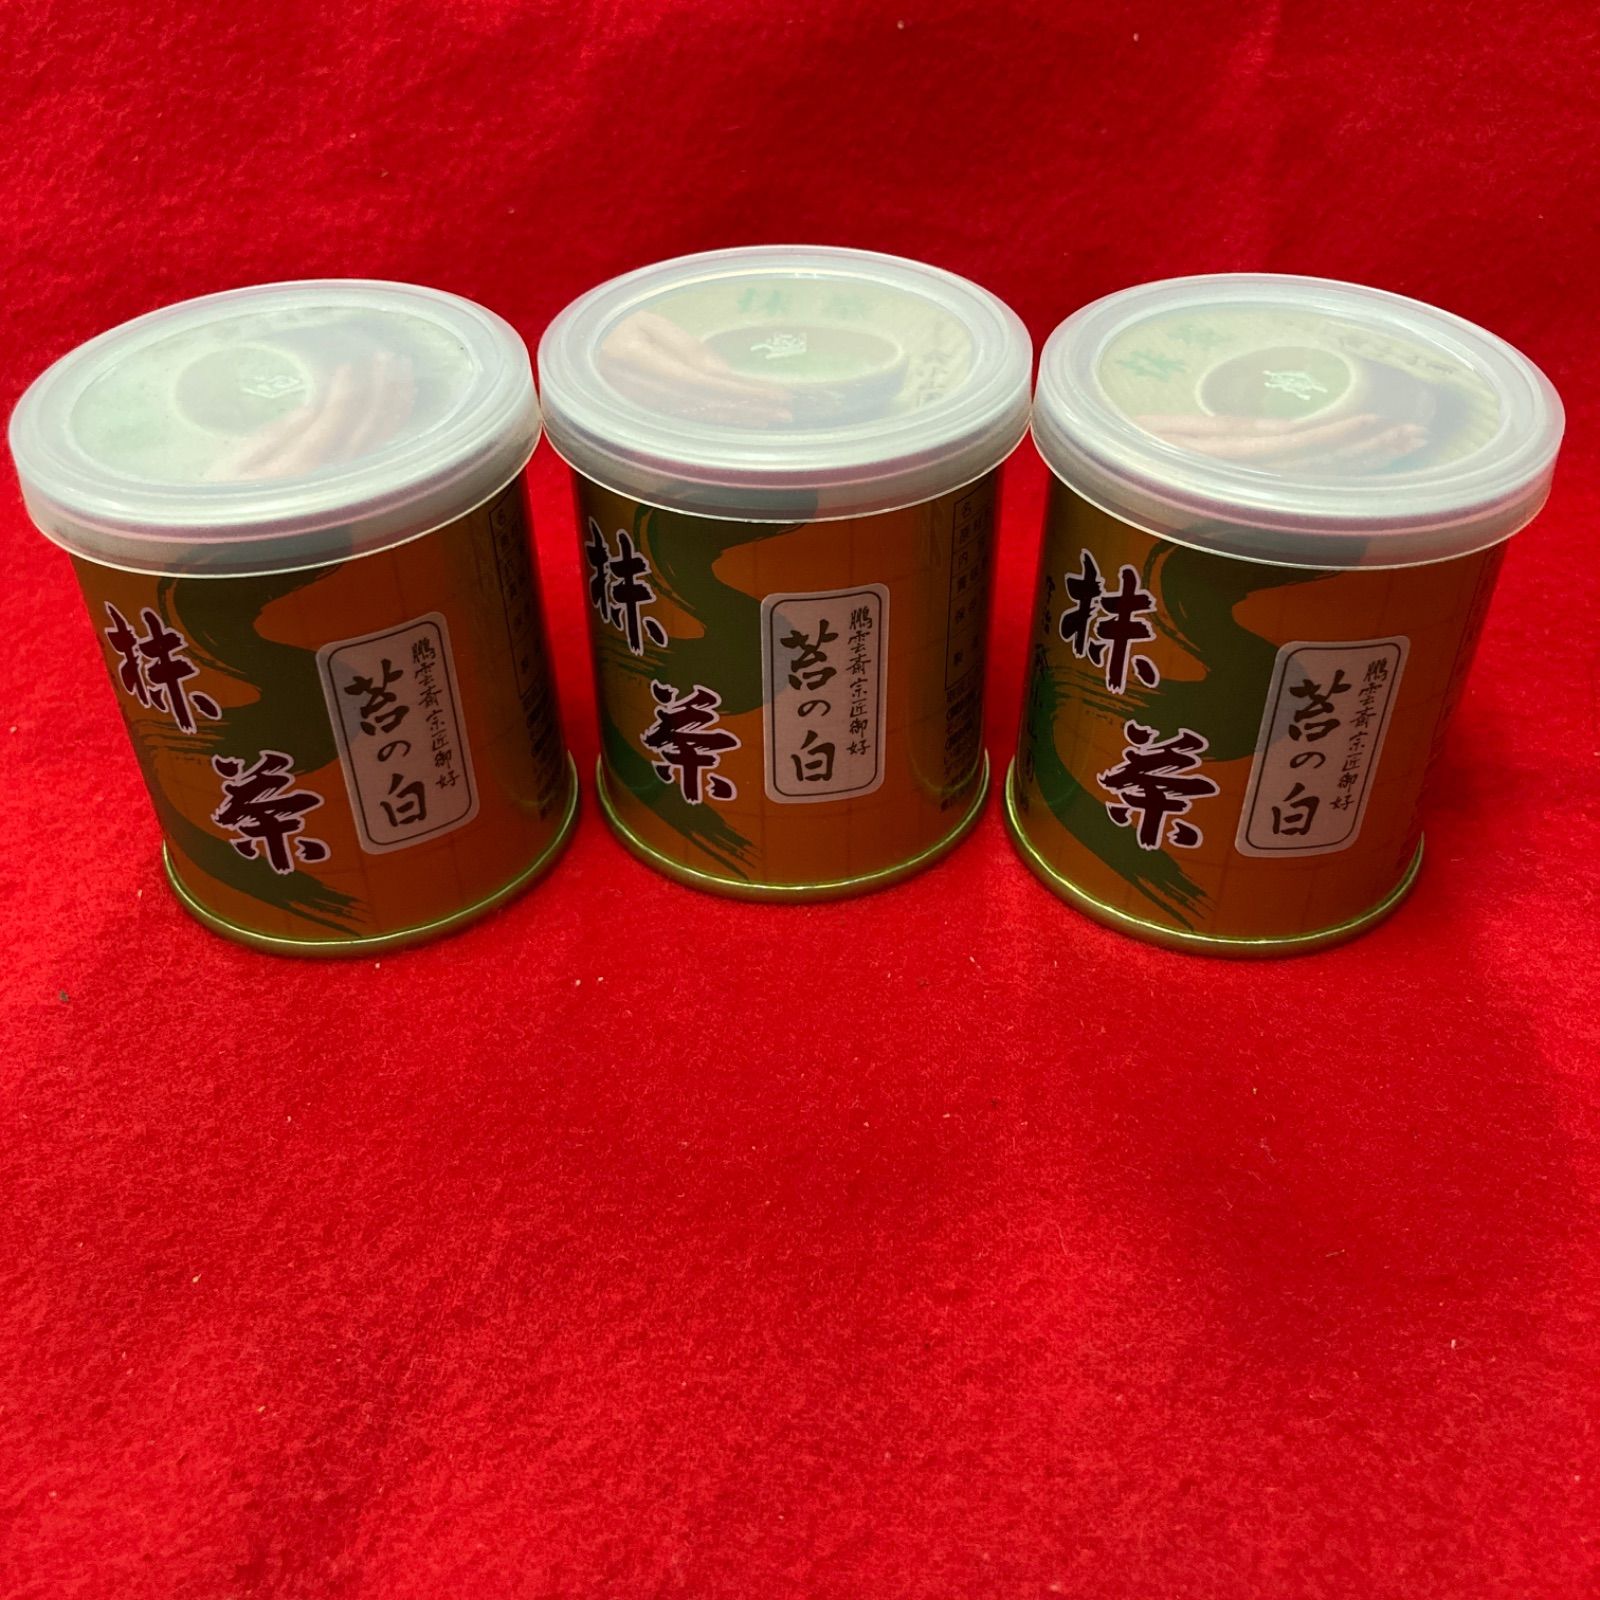 ✳️yoikaimono様専用 京都山政小山園製 抹茶 苔の白30g3個 - メルカリ